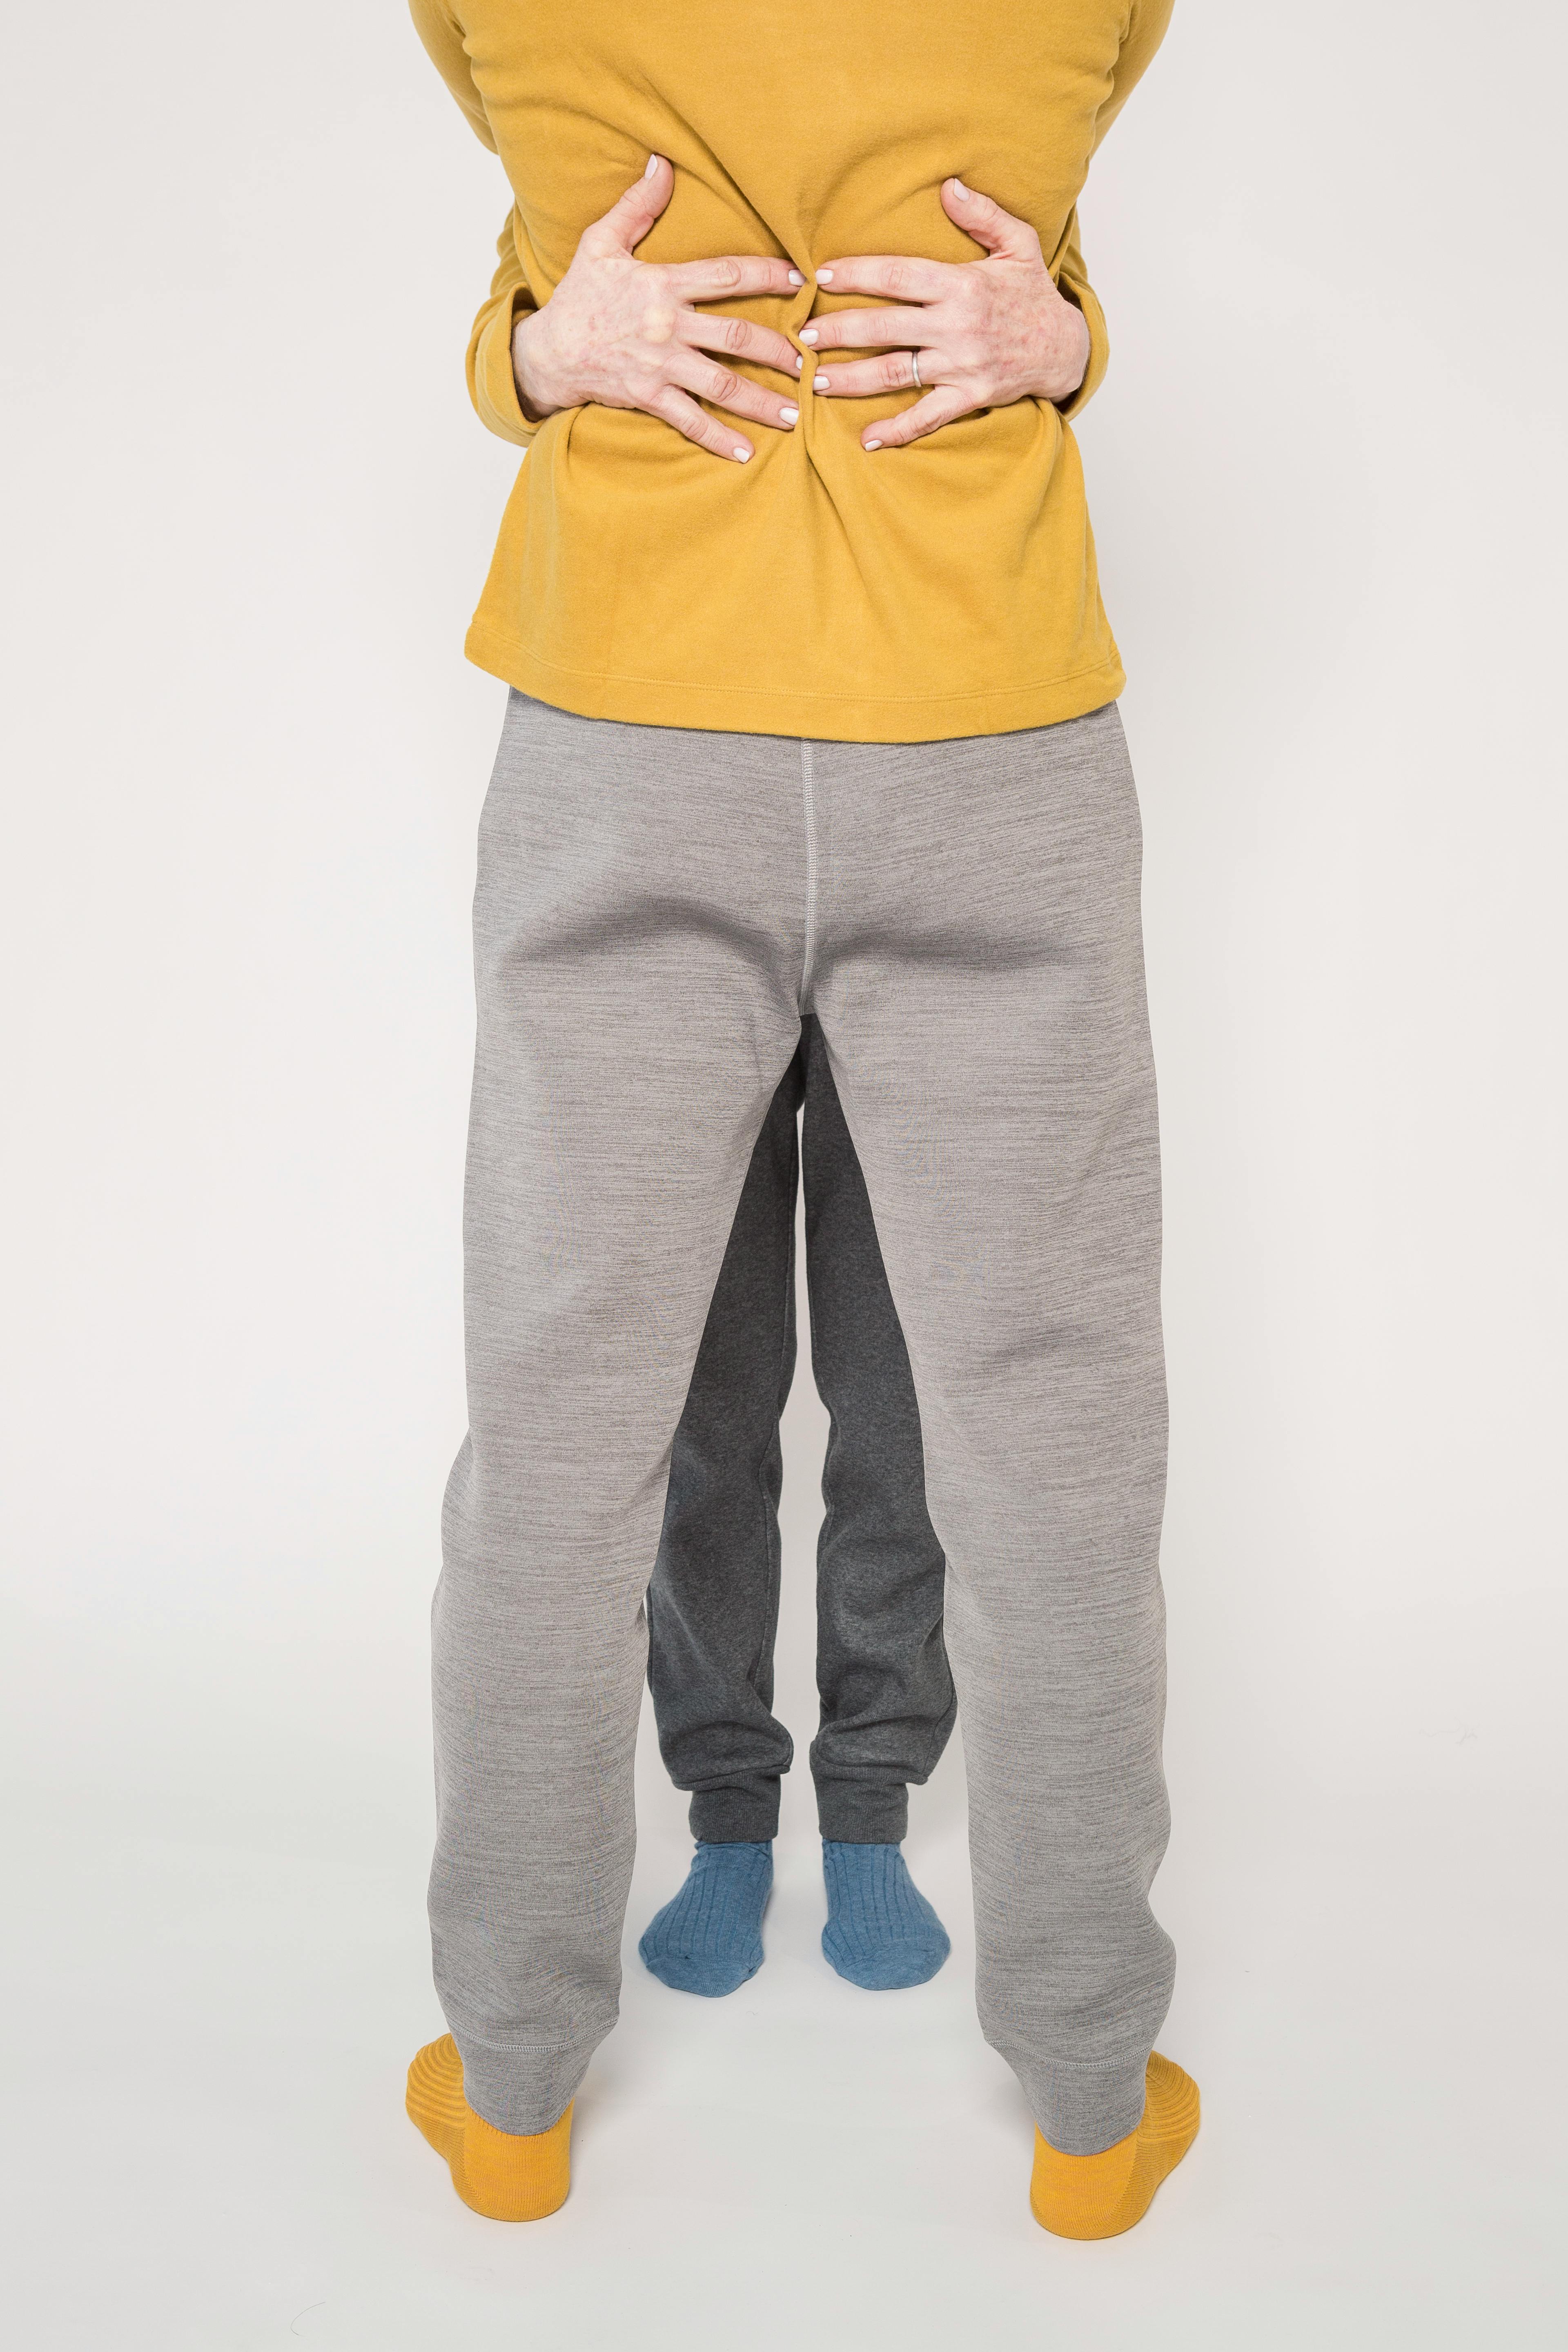 Wearing Light Yellow Shirt Gray Pants Stock Photo 178869227 | Shutterstock